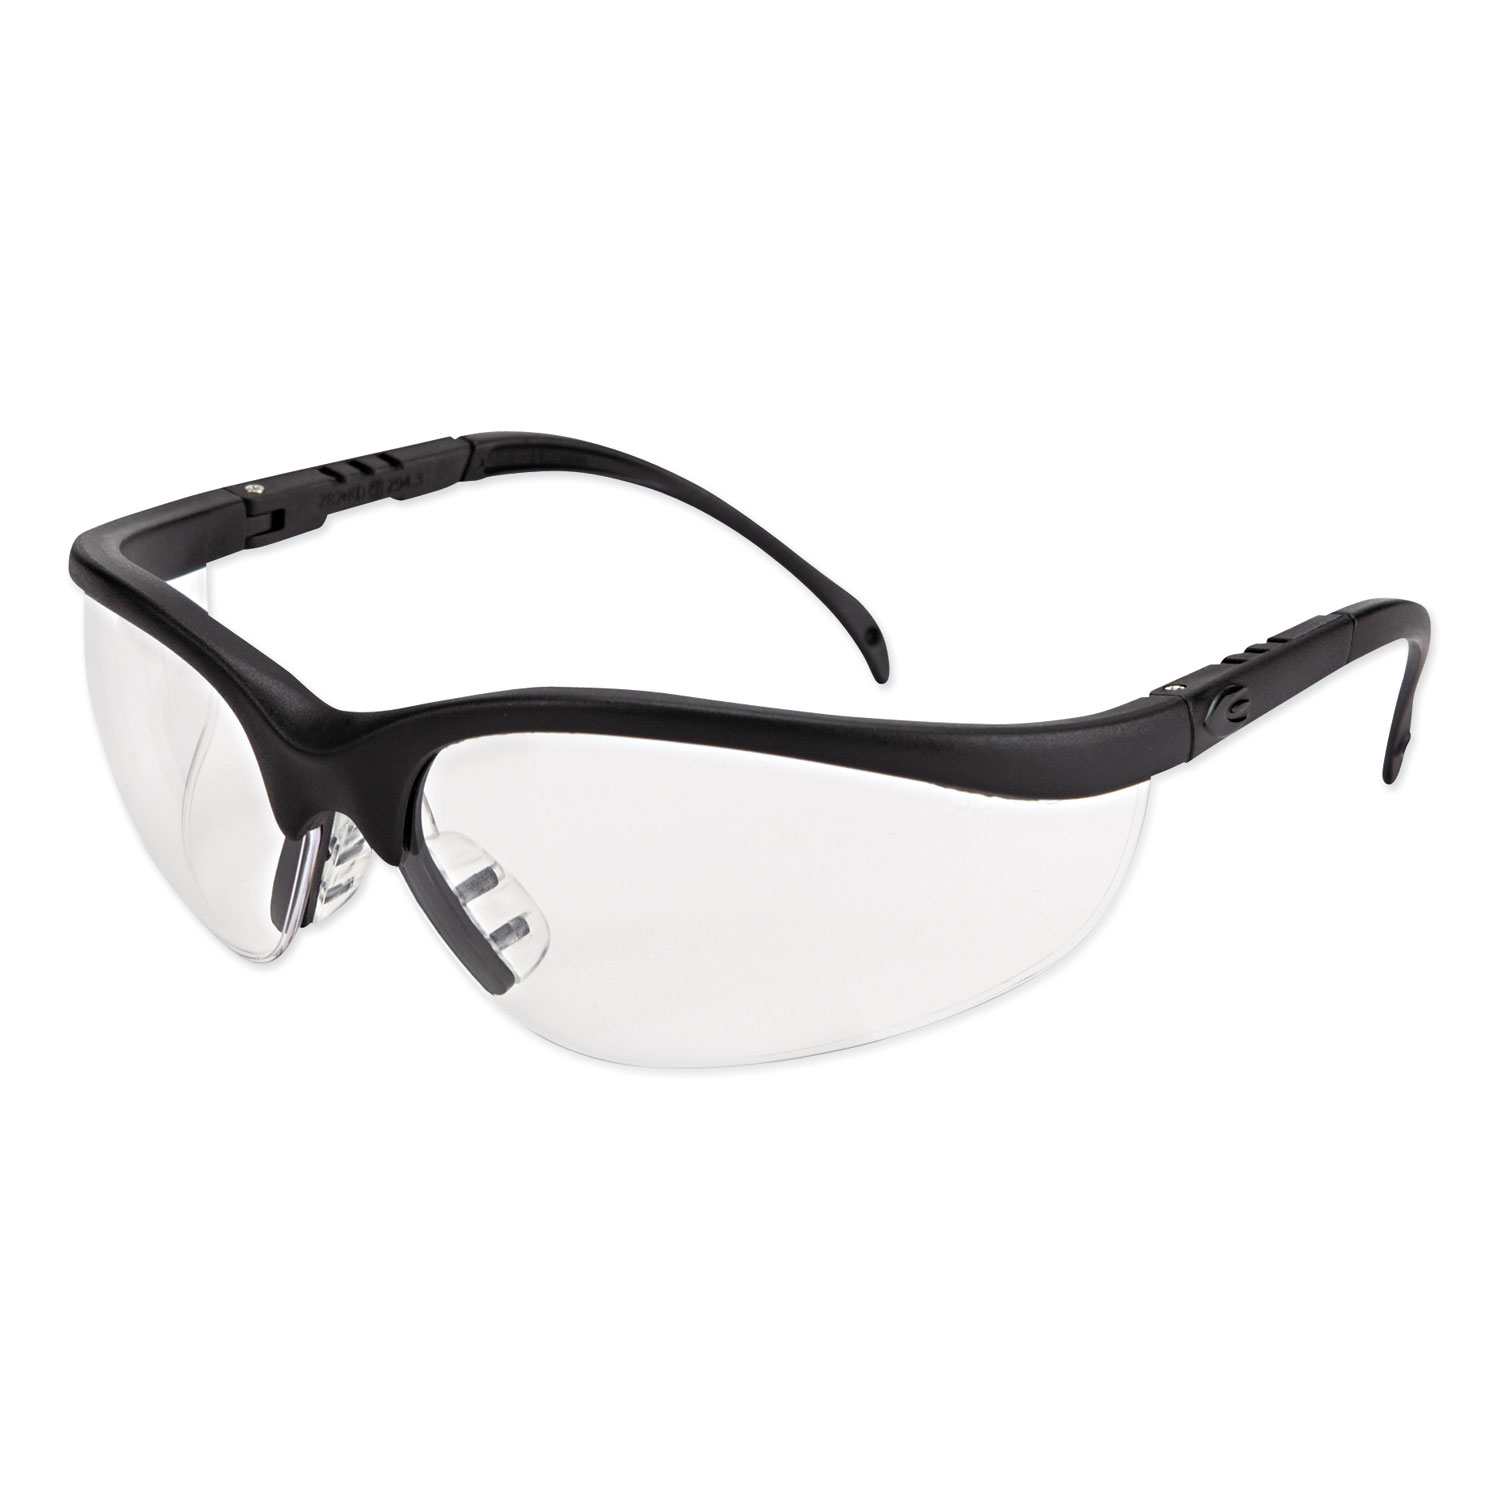  MCR Safety KD110 Klondike Safety Glasses, Matte Black Frame, Clear Lens (CRWKD110) 